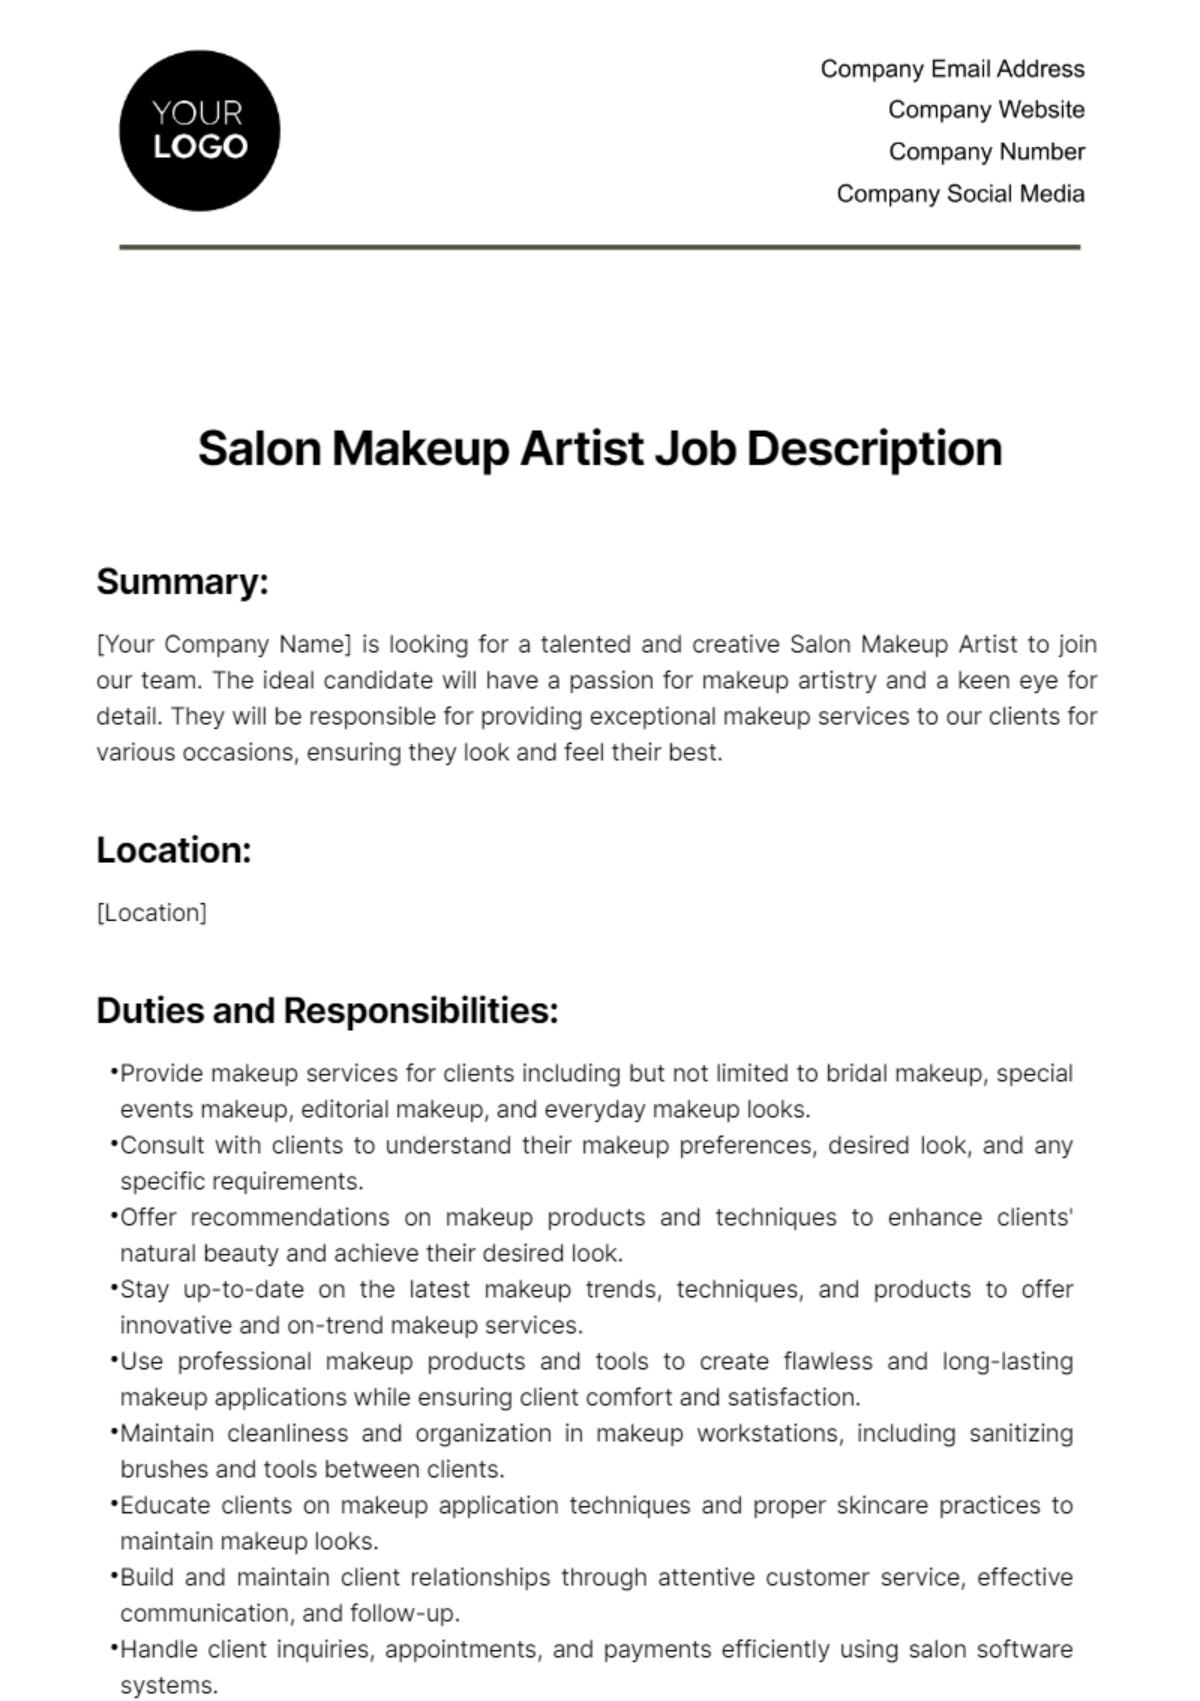 Free Salon Makeup Artist Job Description Template